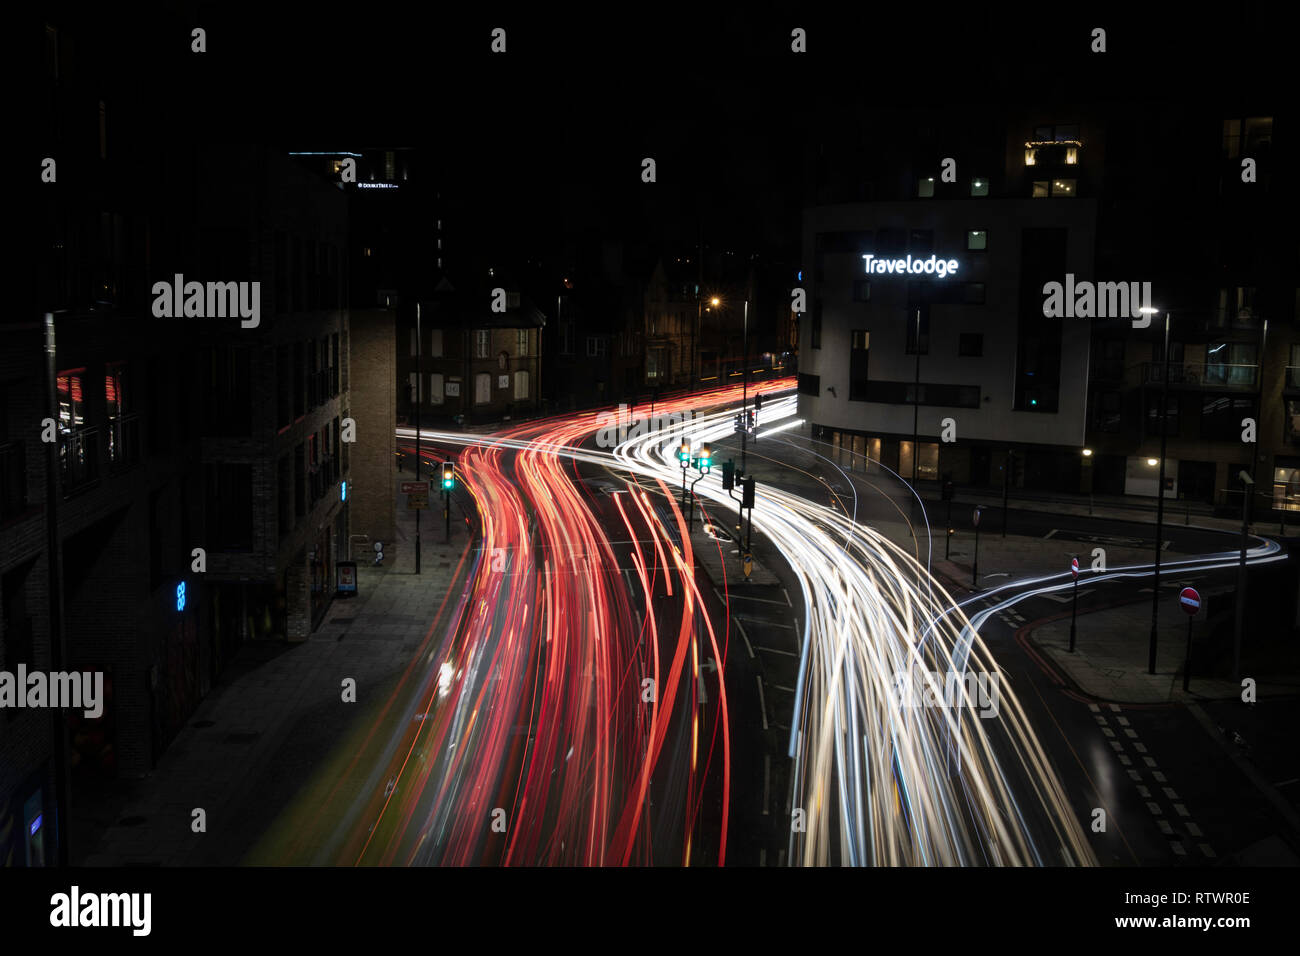 Lewisham night London street with passing cars Stock Photo